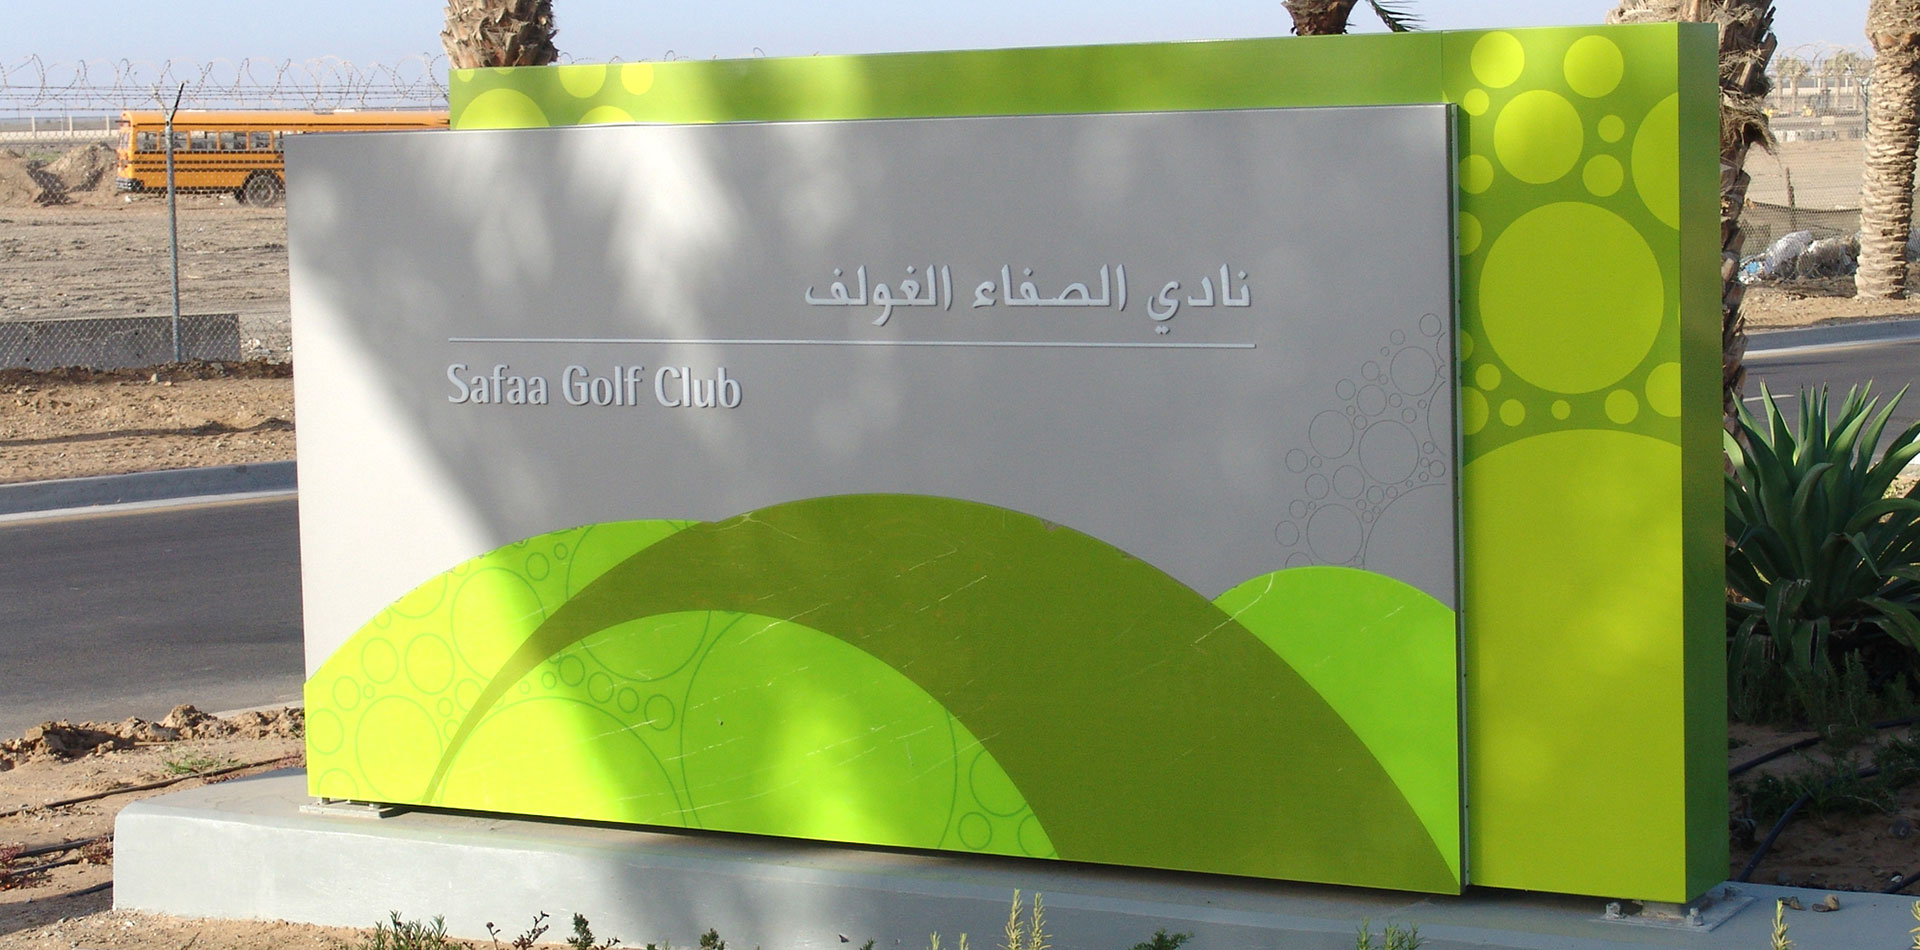 Monument Signage of Safaa Golf Club